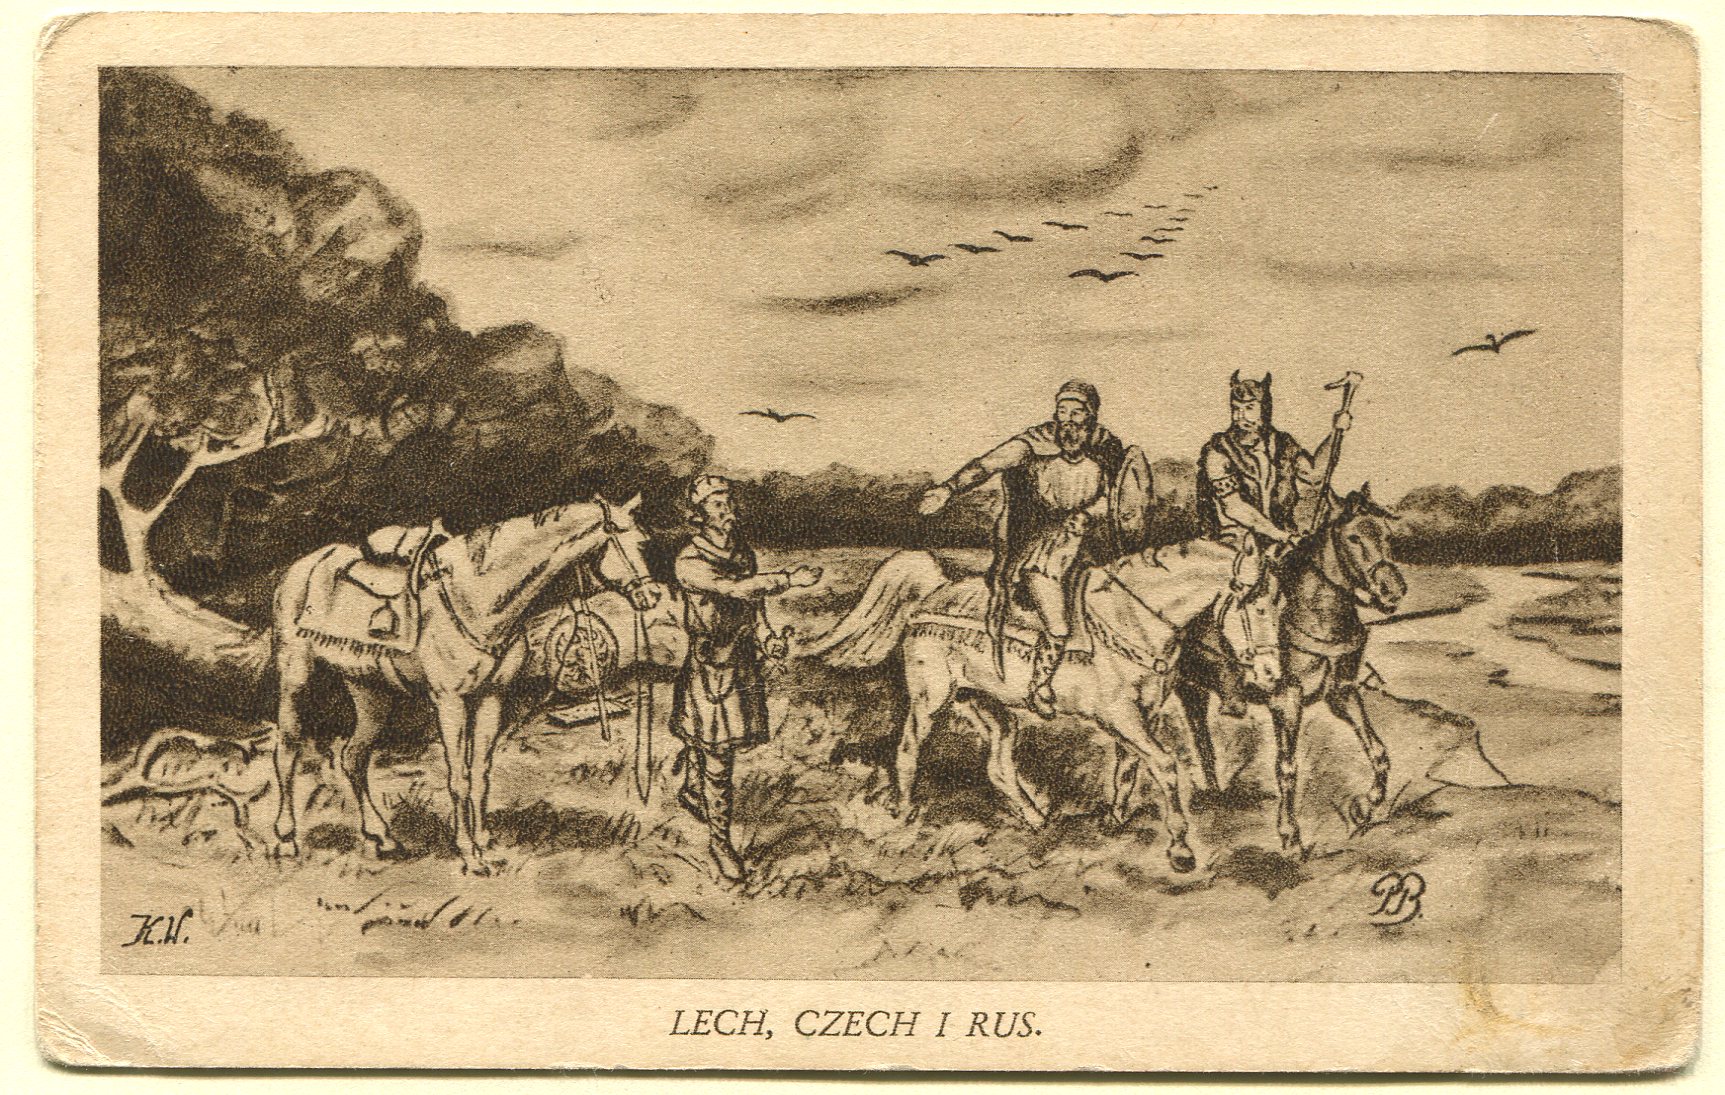 Легенда о Чехе, Лехе и Русе, основателях славянских народов